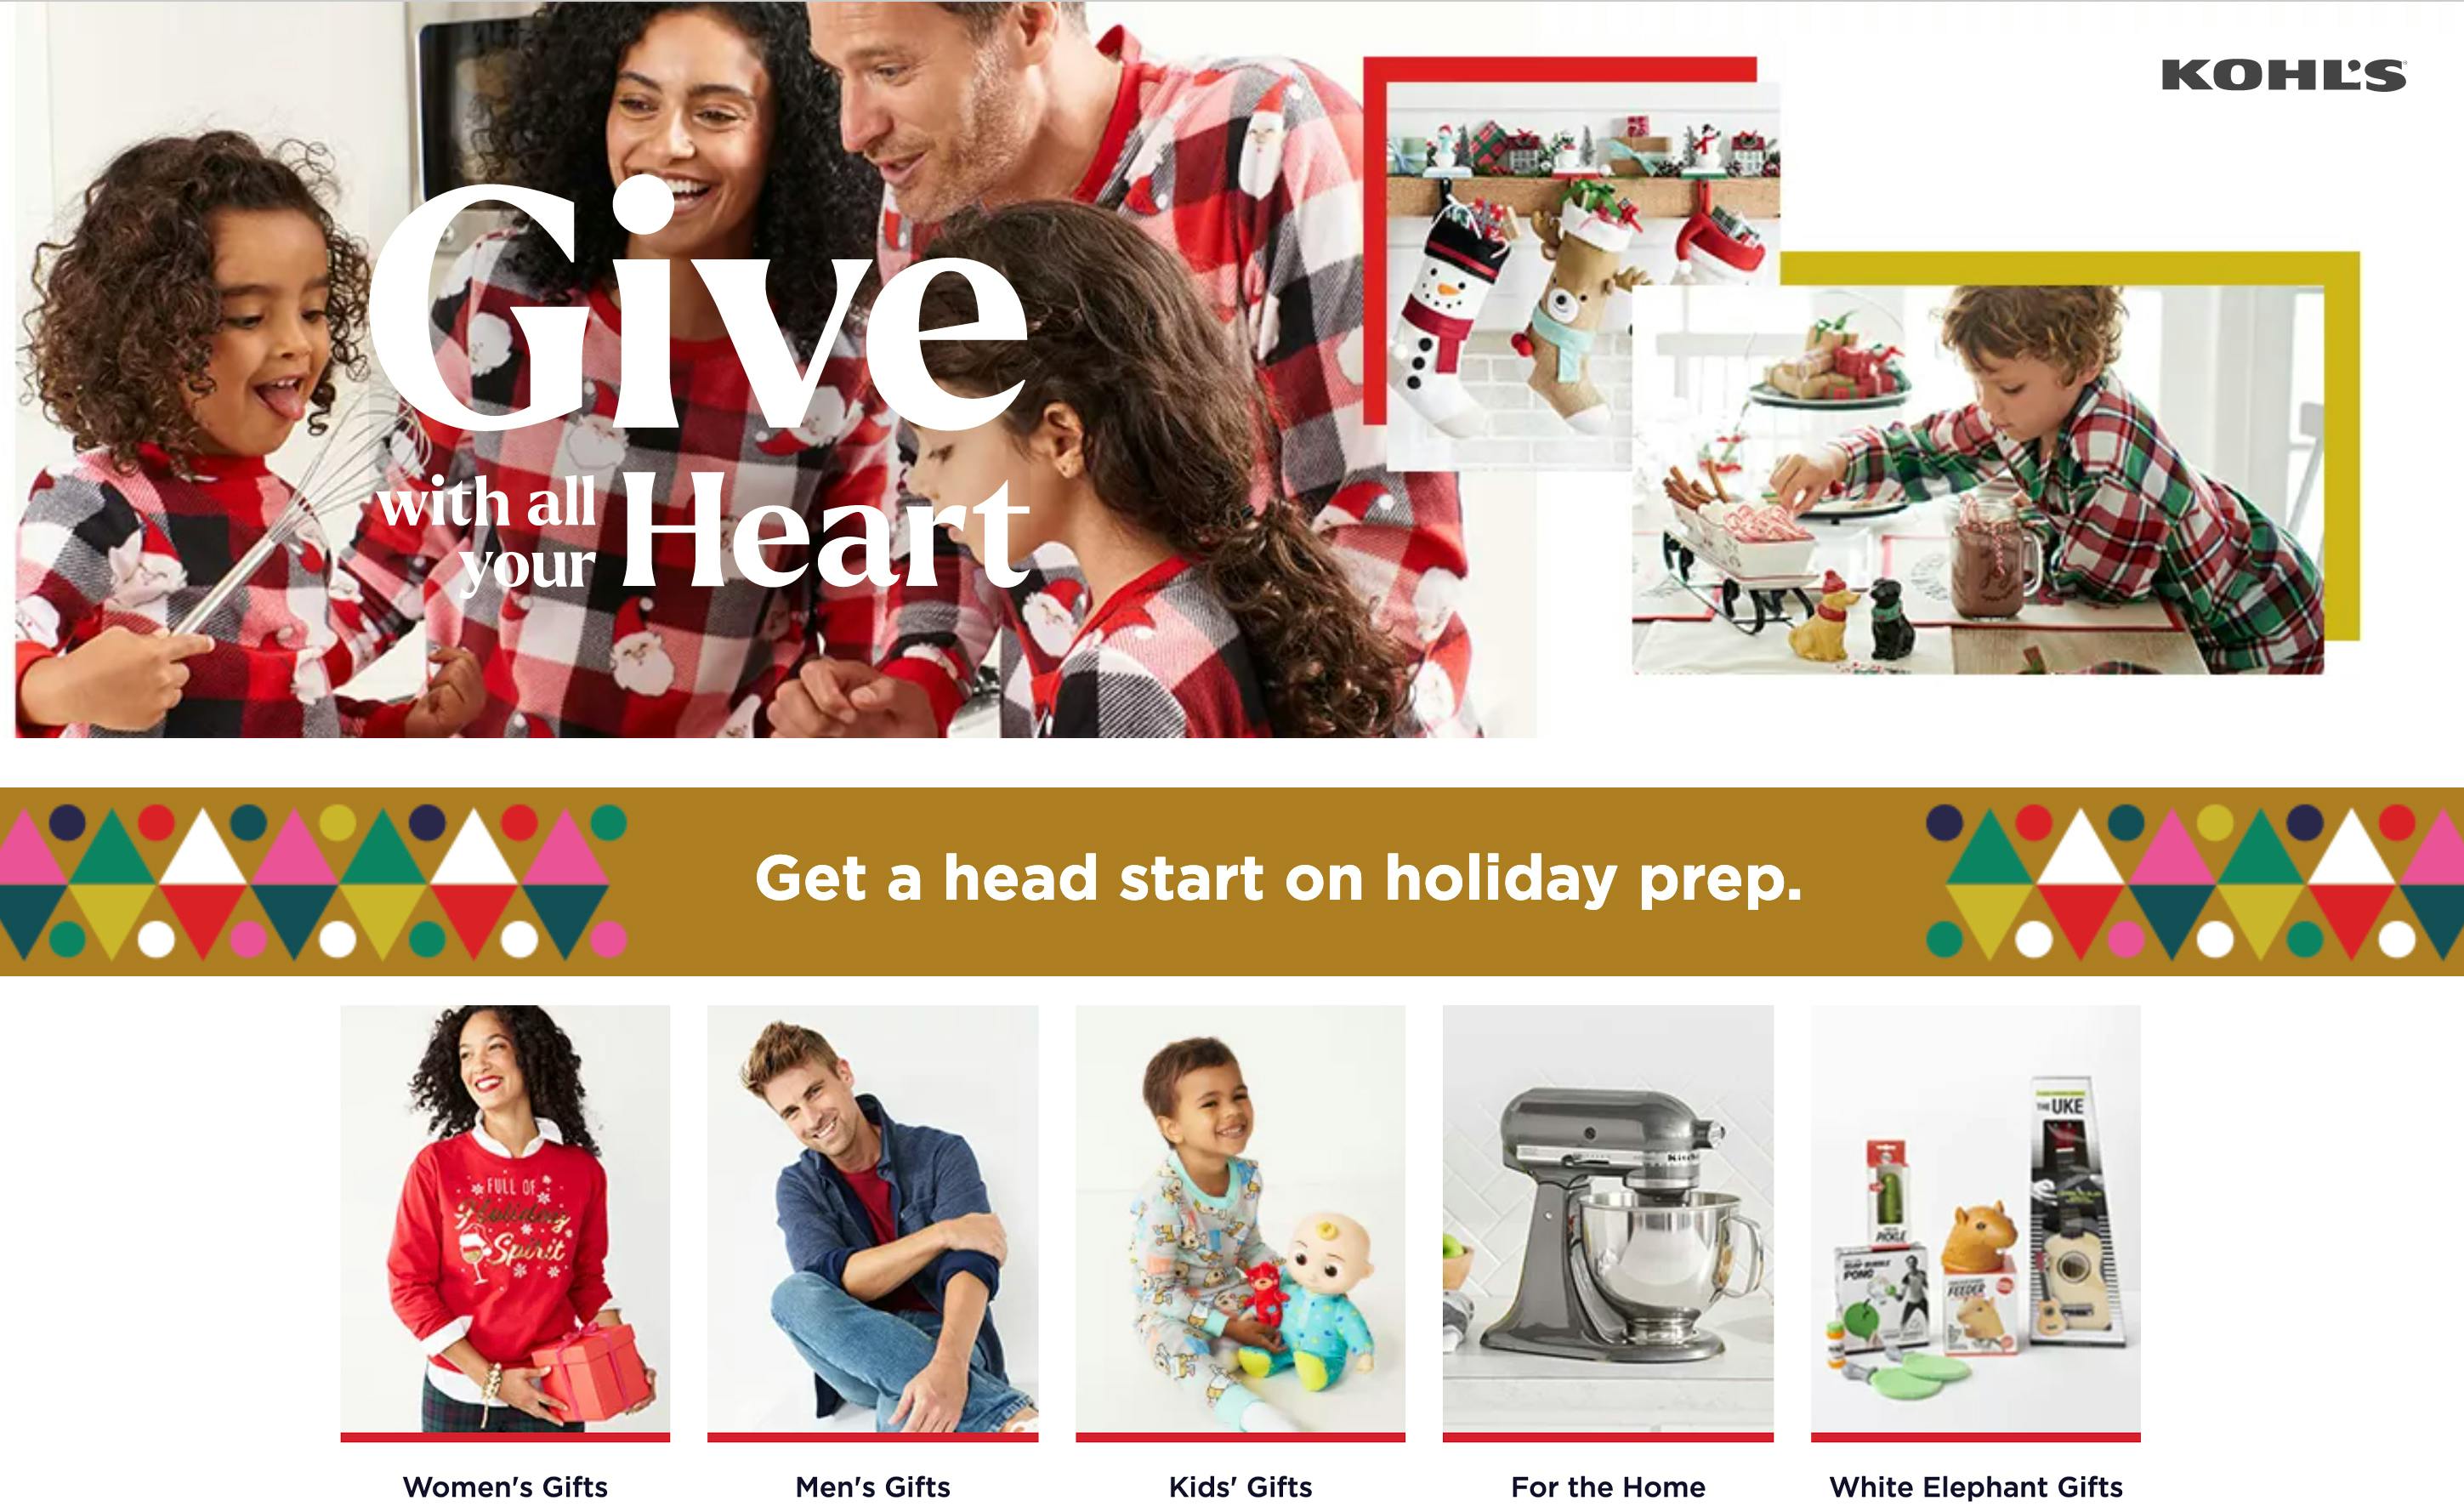 Kohl's holiday gift guide webpage screenshot